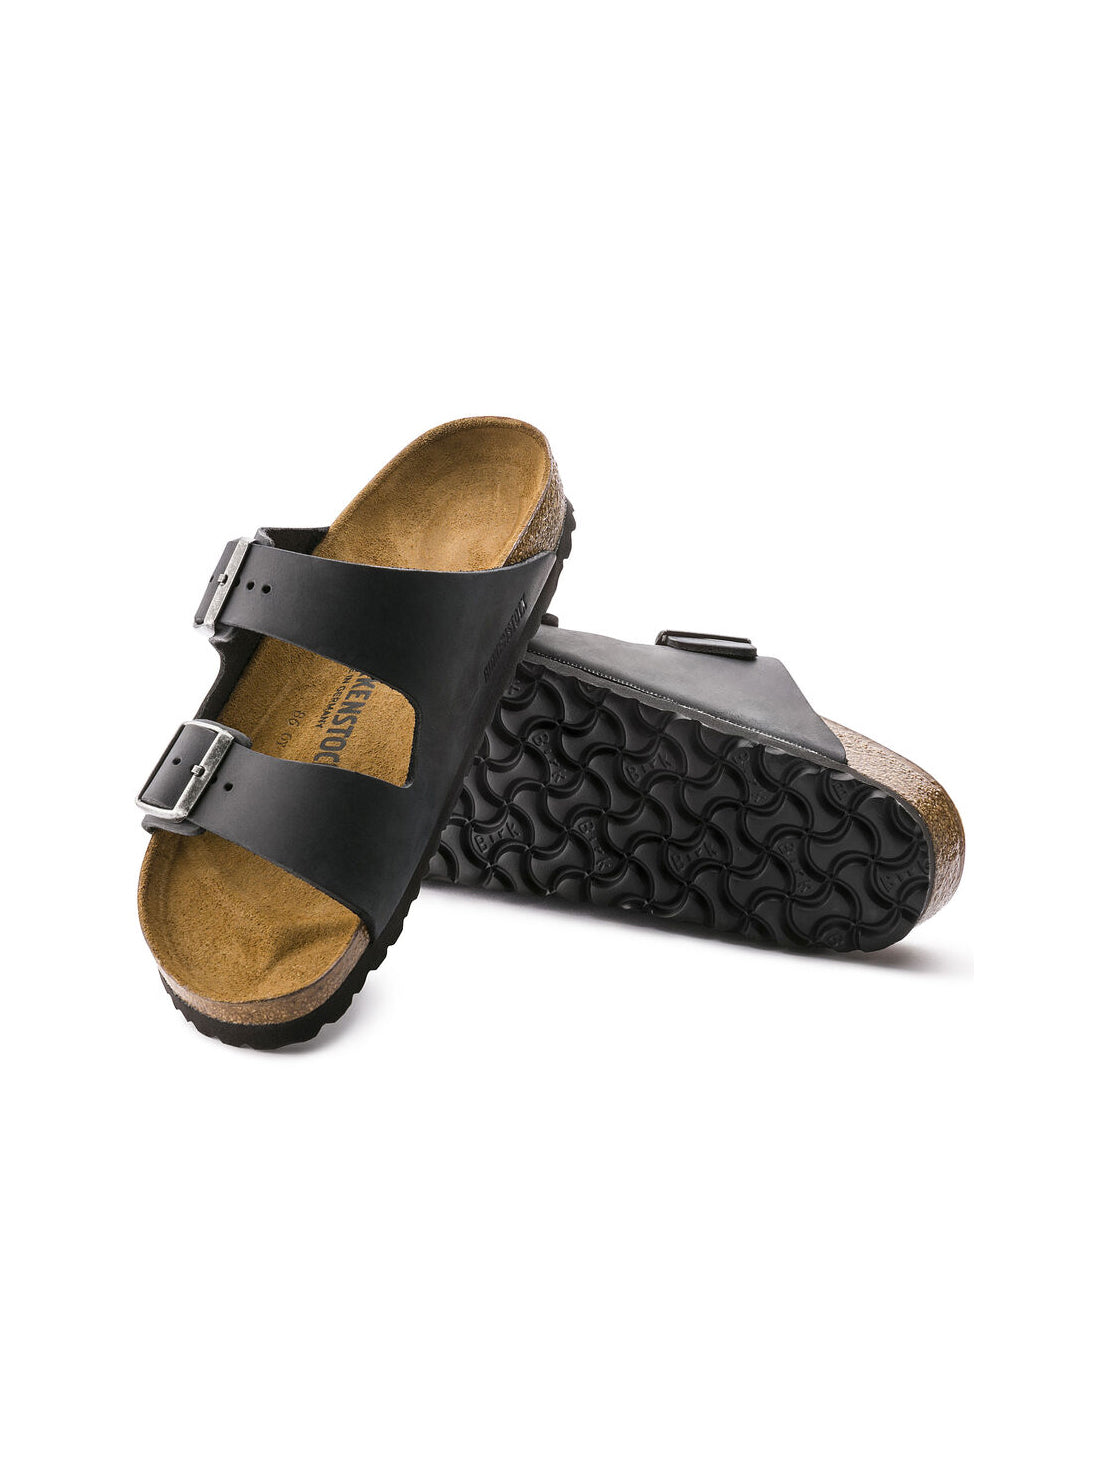 birkenstock arizona sandal in black oiled leather regular